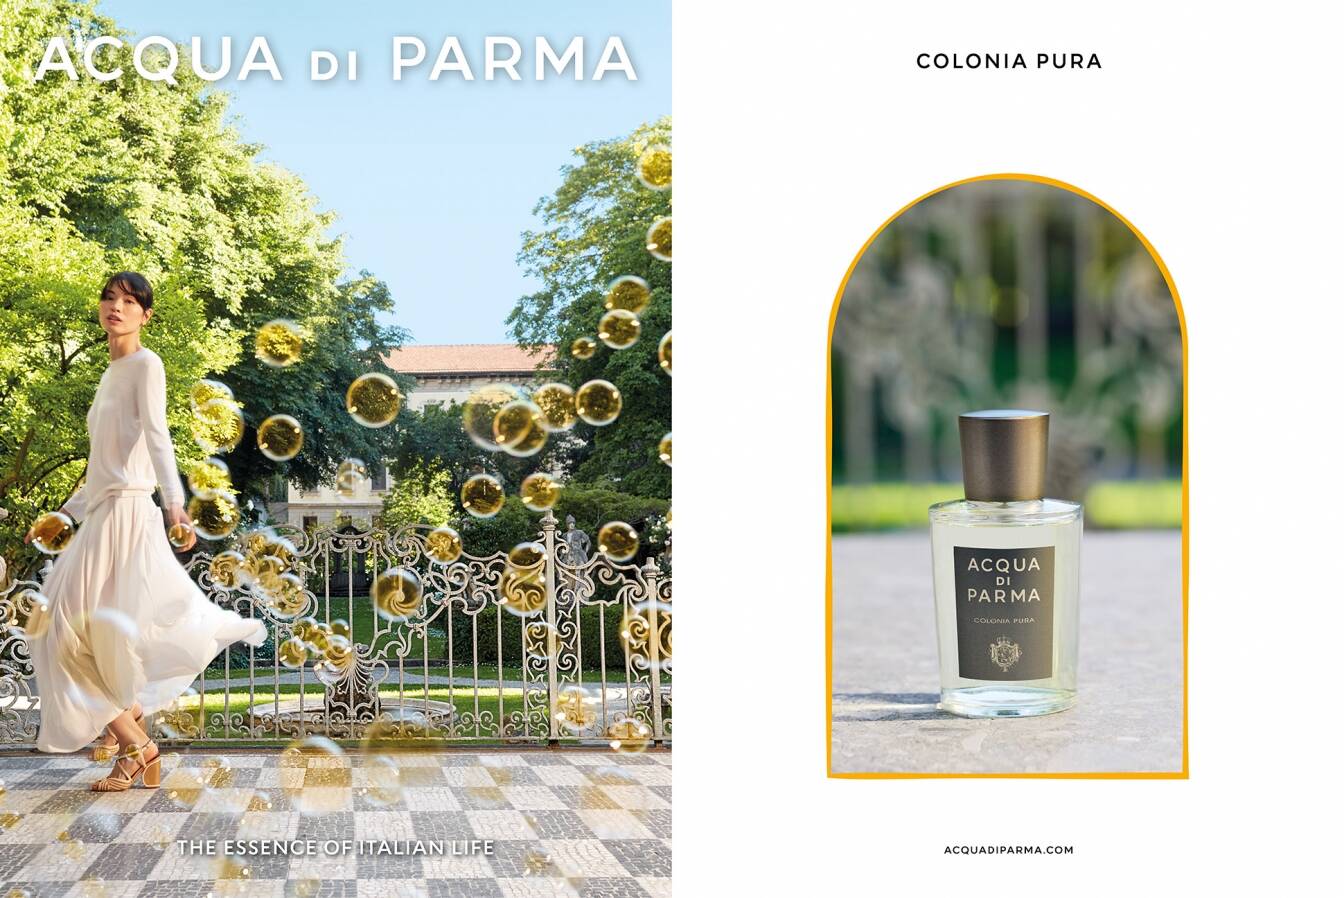 Acqua Di Parma Colonia Club Review (2023): A Perfect Gentleman's